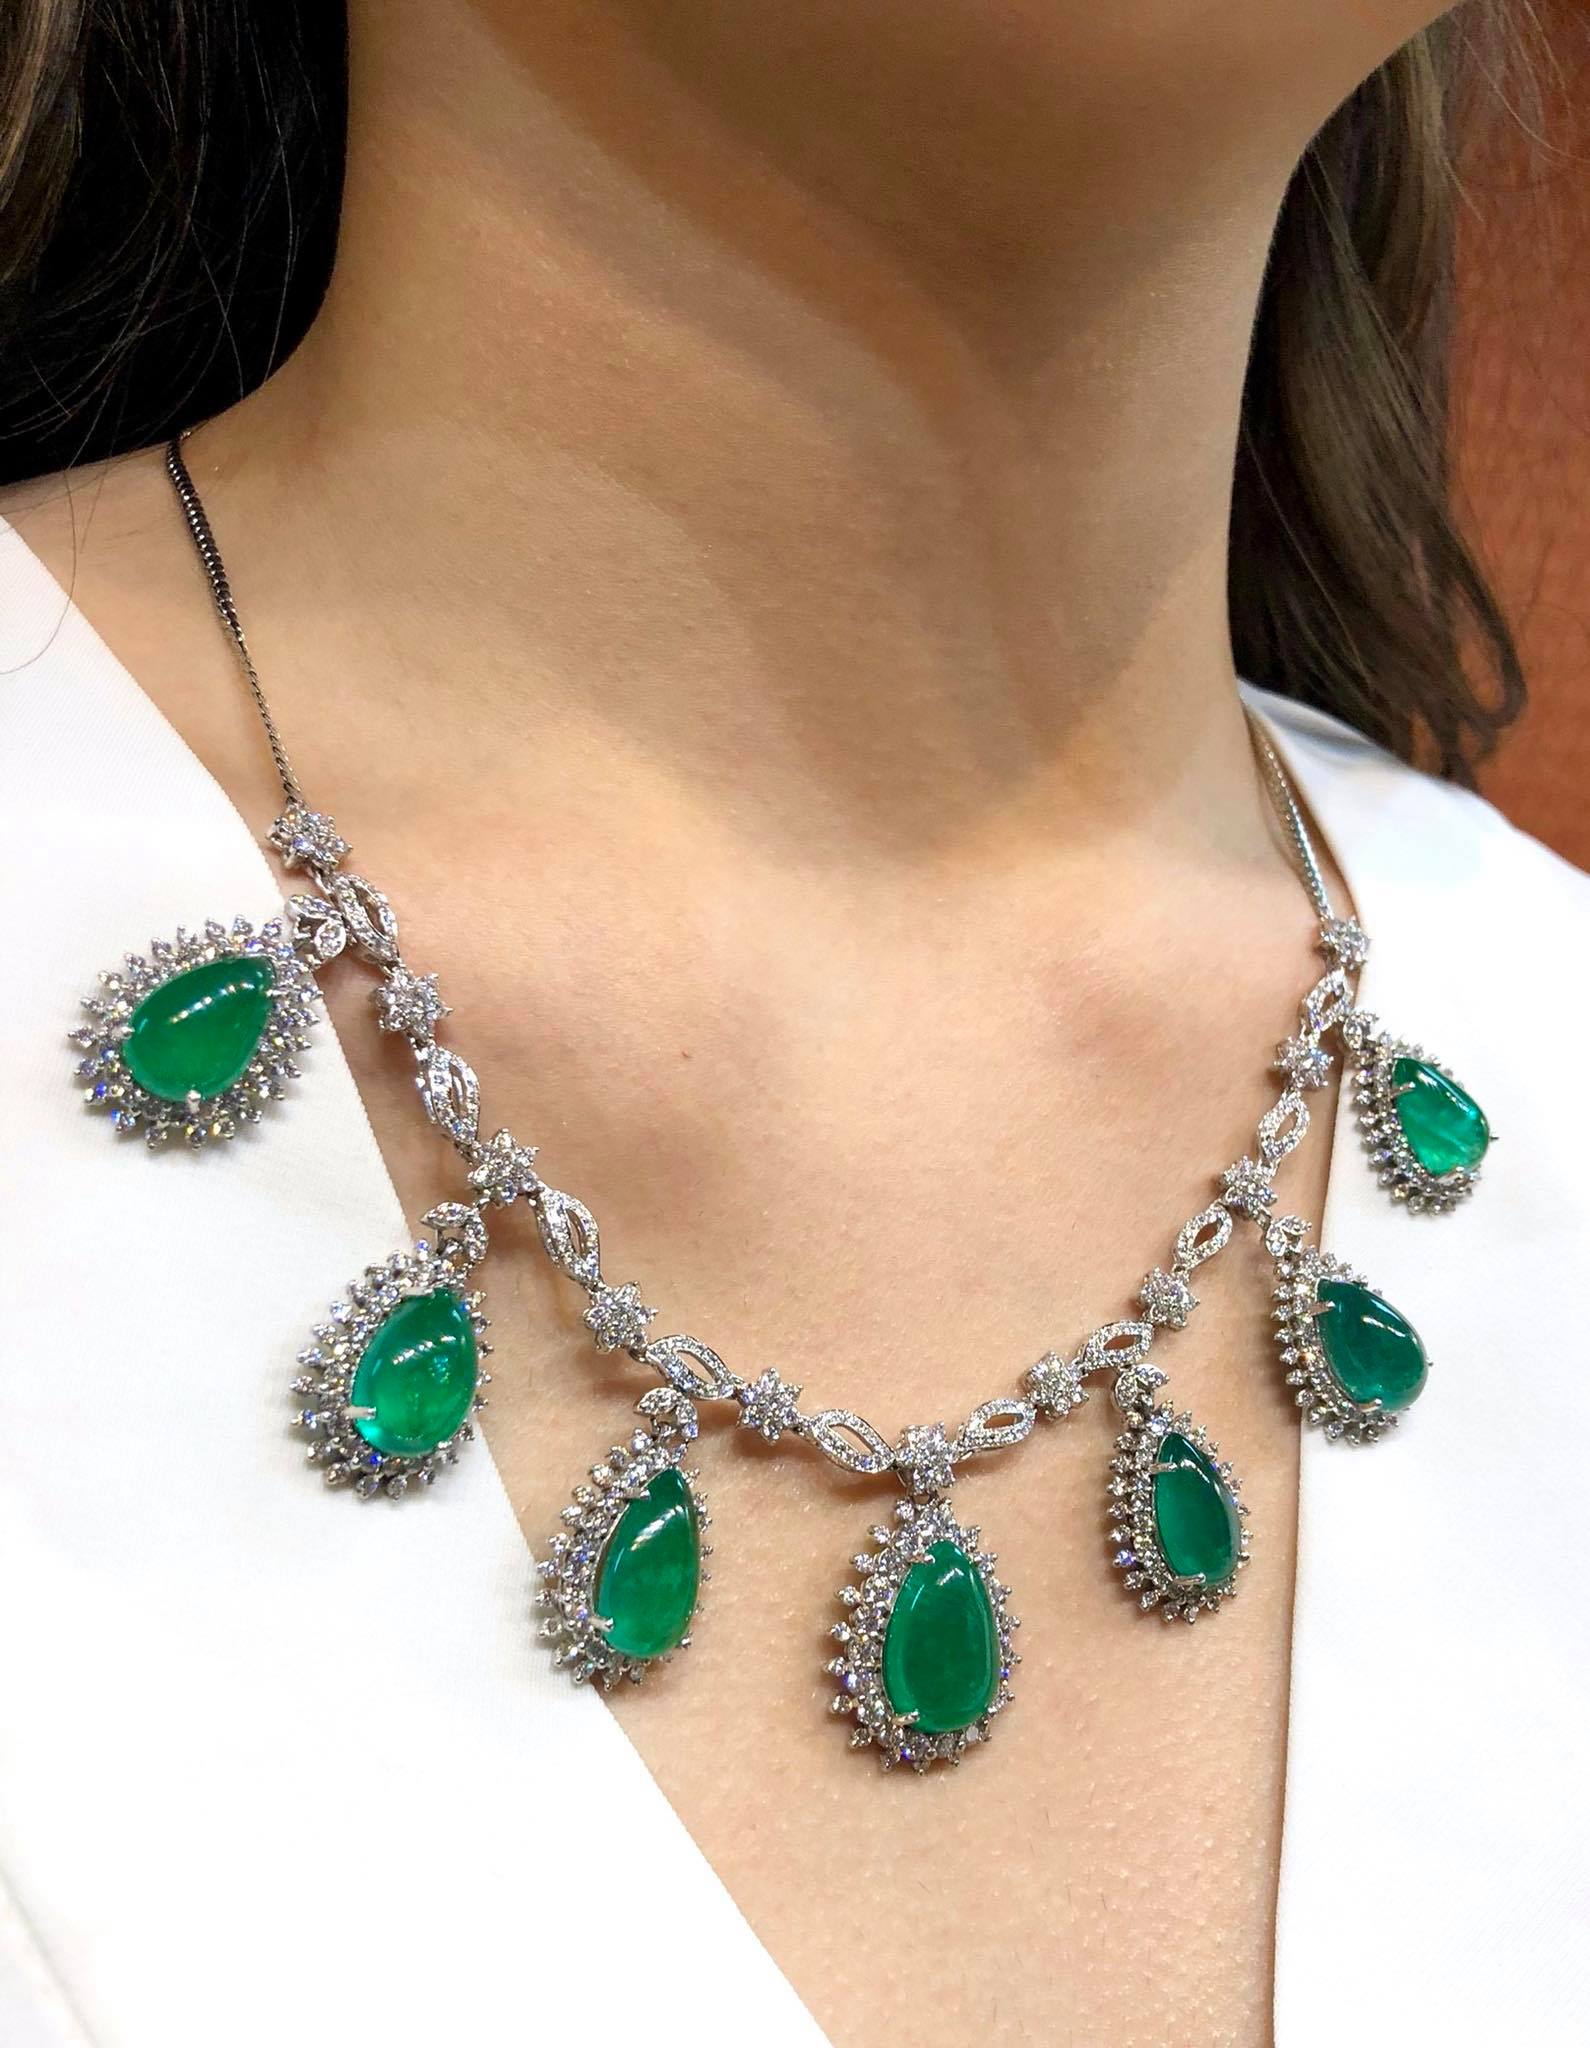 Luxurious Style for Those Who Enjoy Elegant Jewelry!